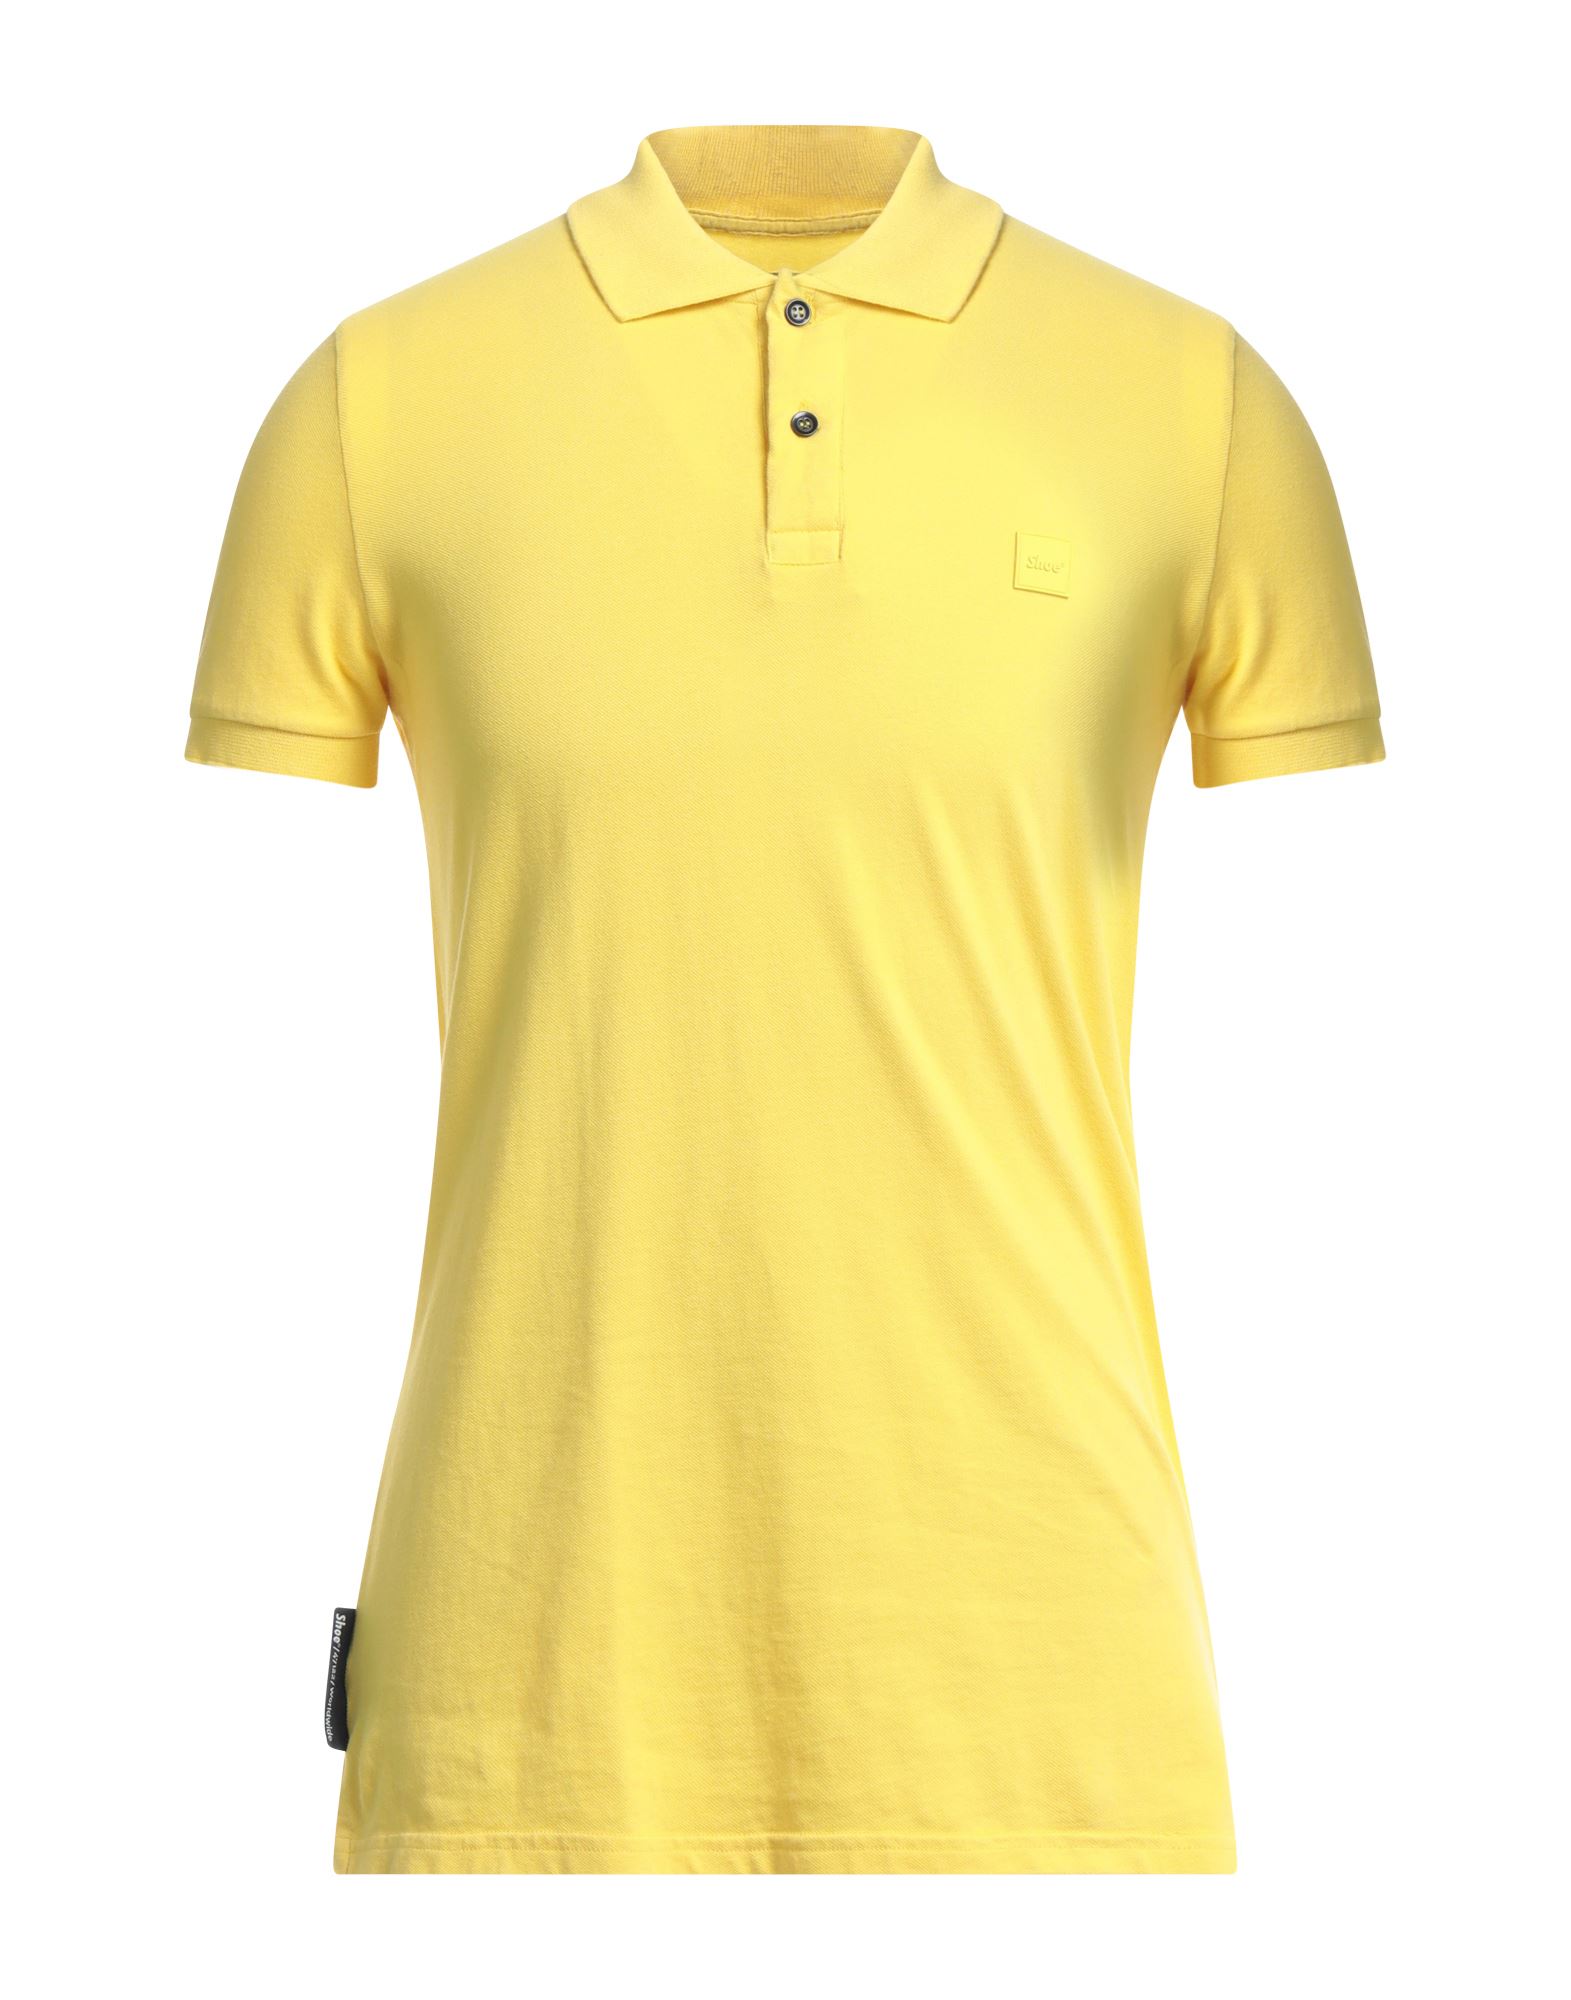 Shoe® Shoe Man Polo Shirt Yellow Size S Cotton, Elastane